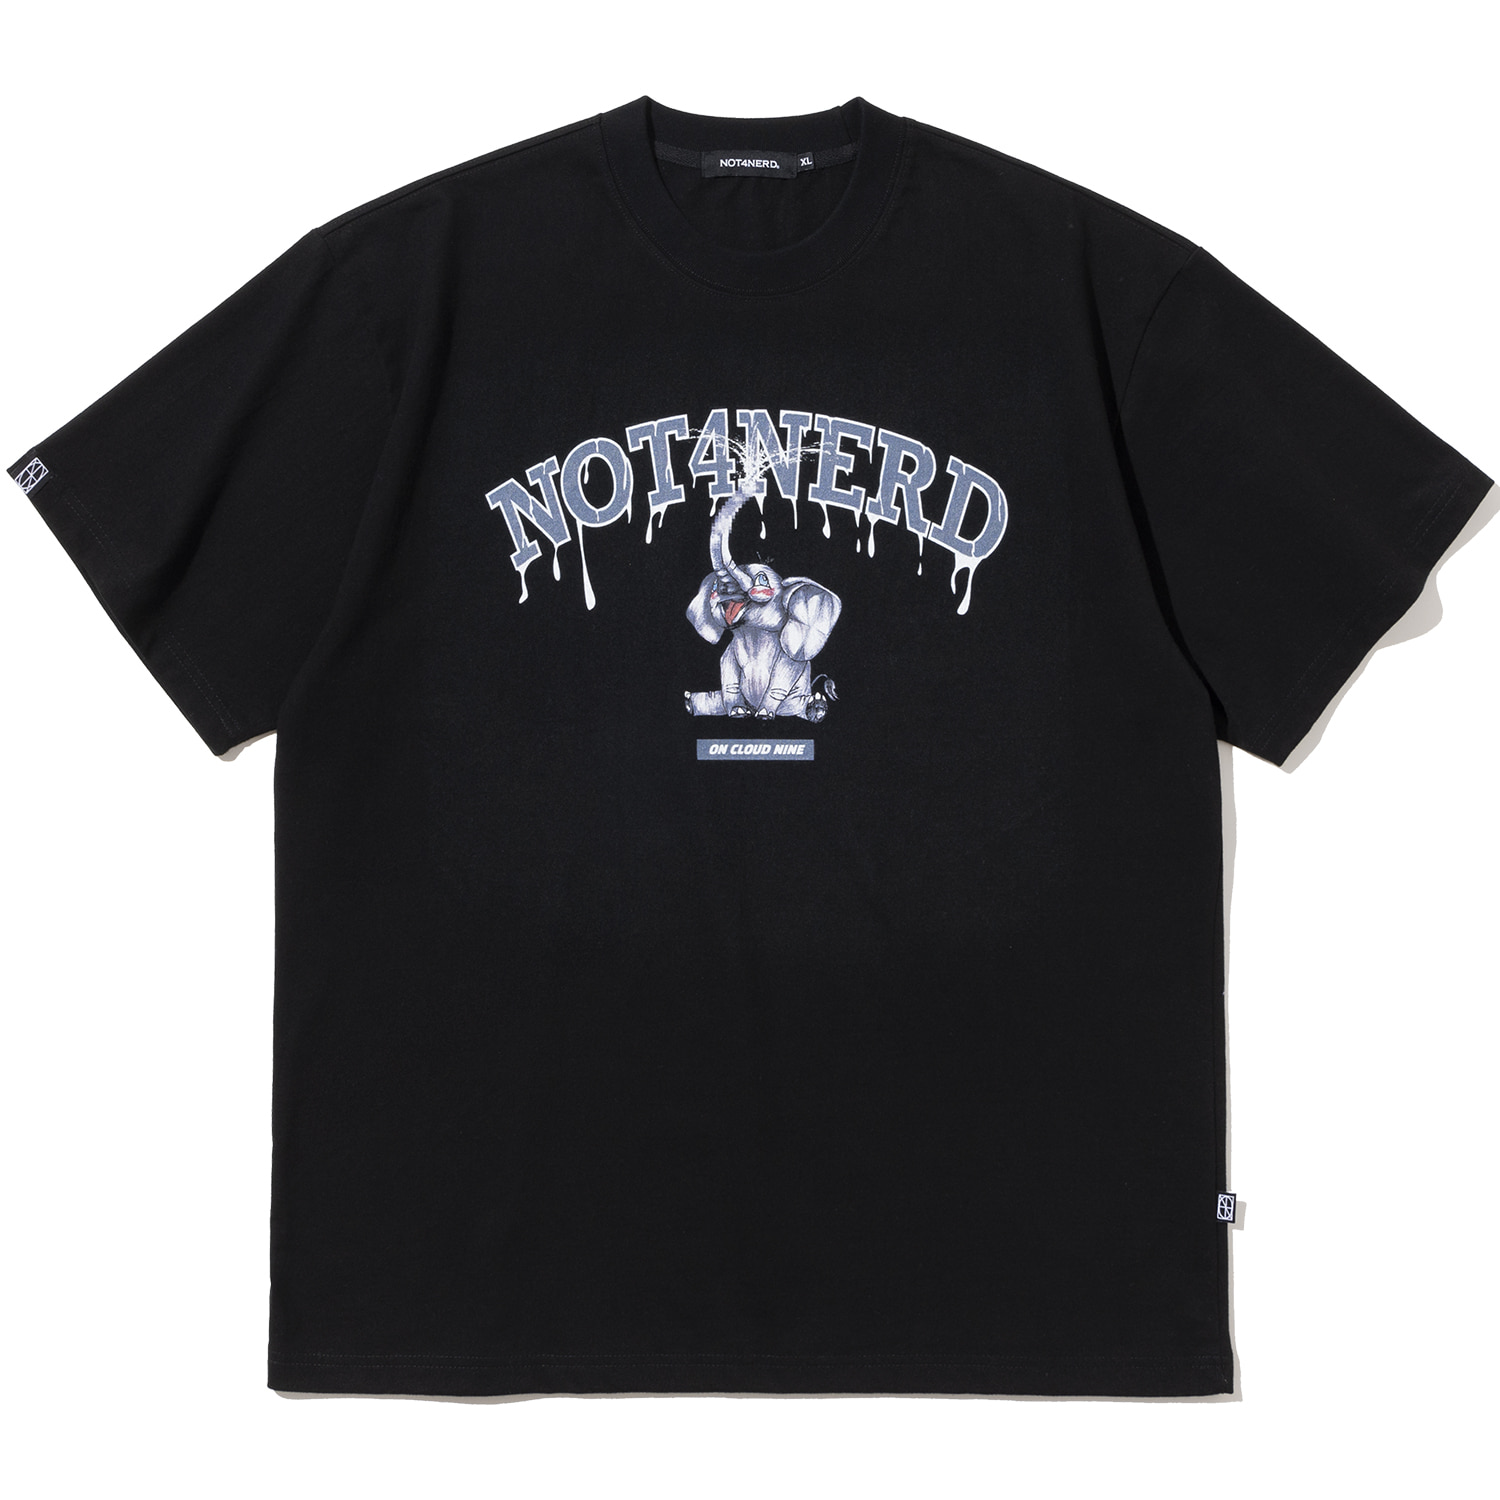 Elephant T-Shirts - Black,NOT4NERD